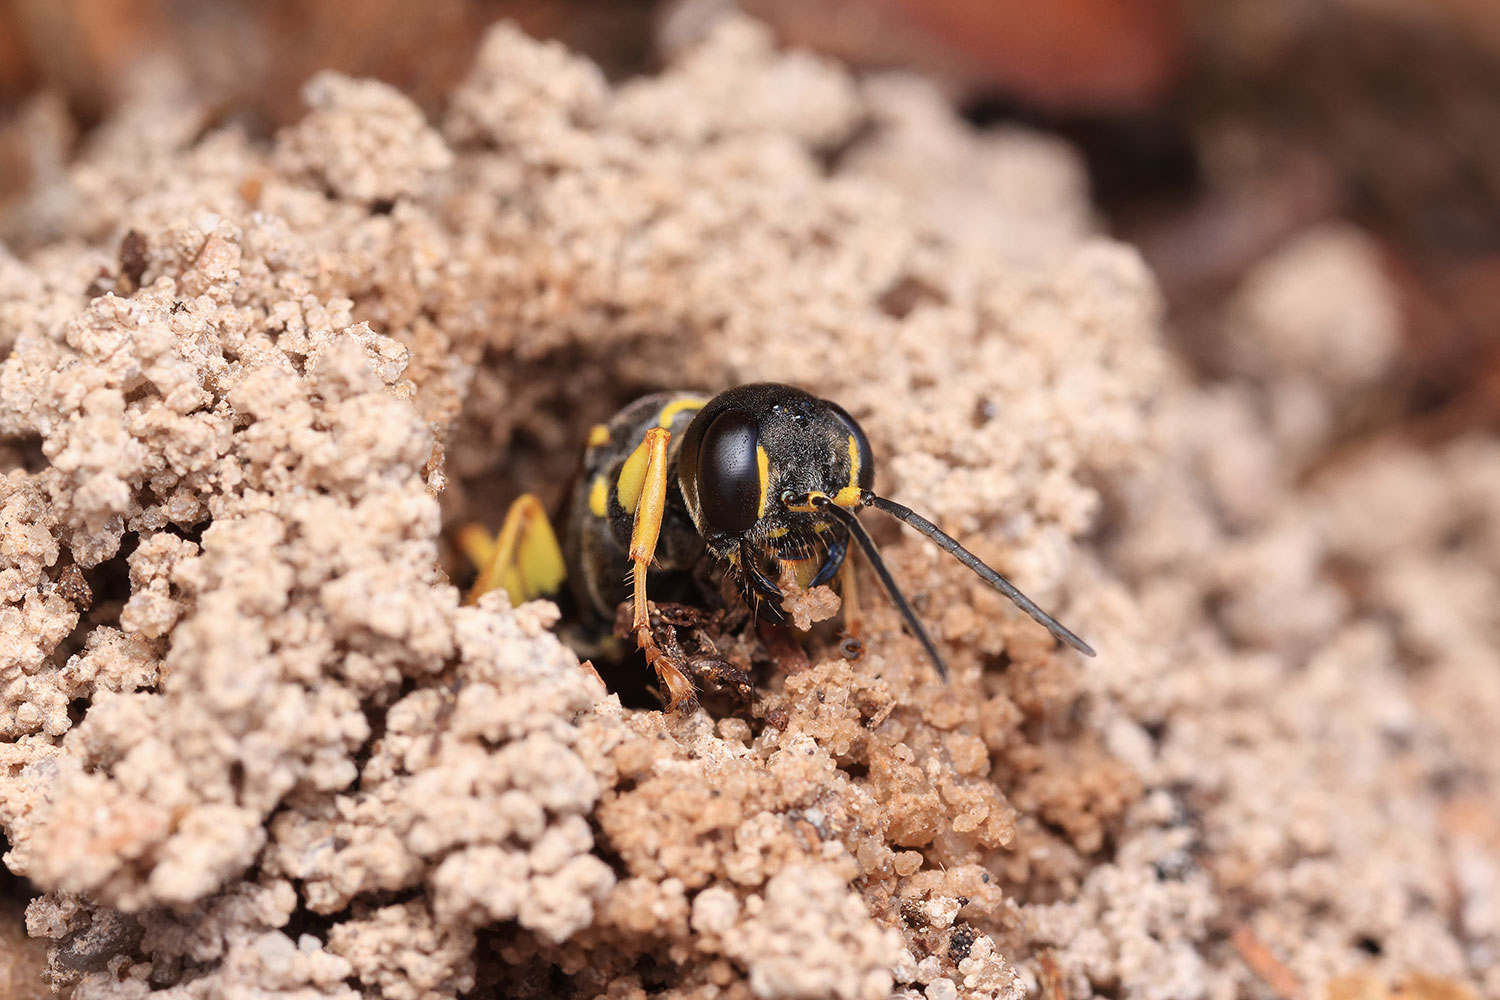 Field digger wasp / medolib polní (Mellinus arvensis)